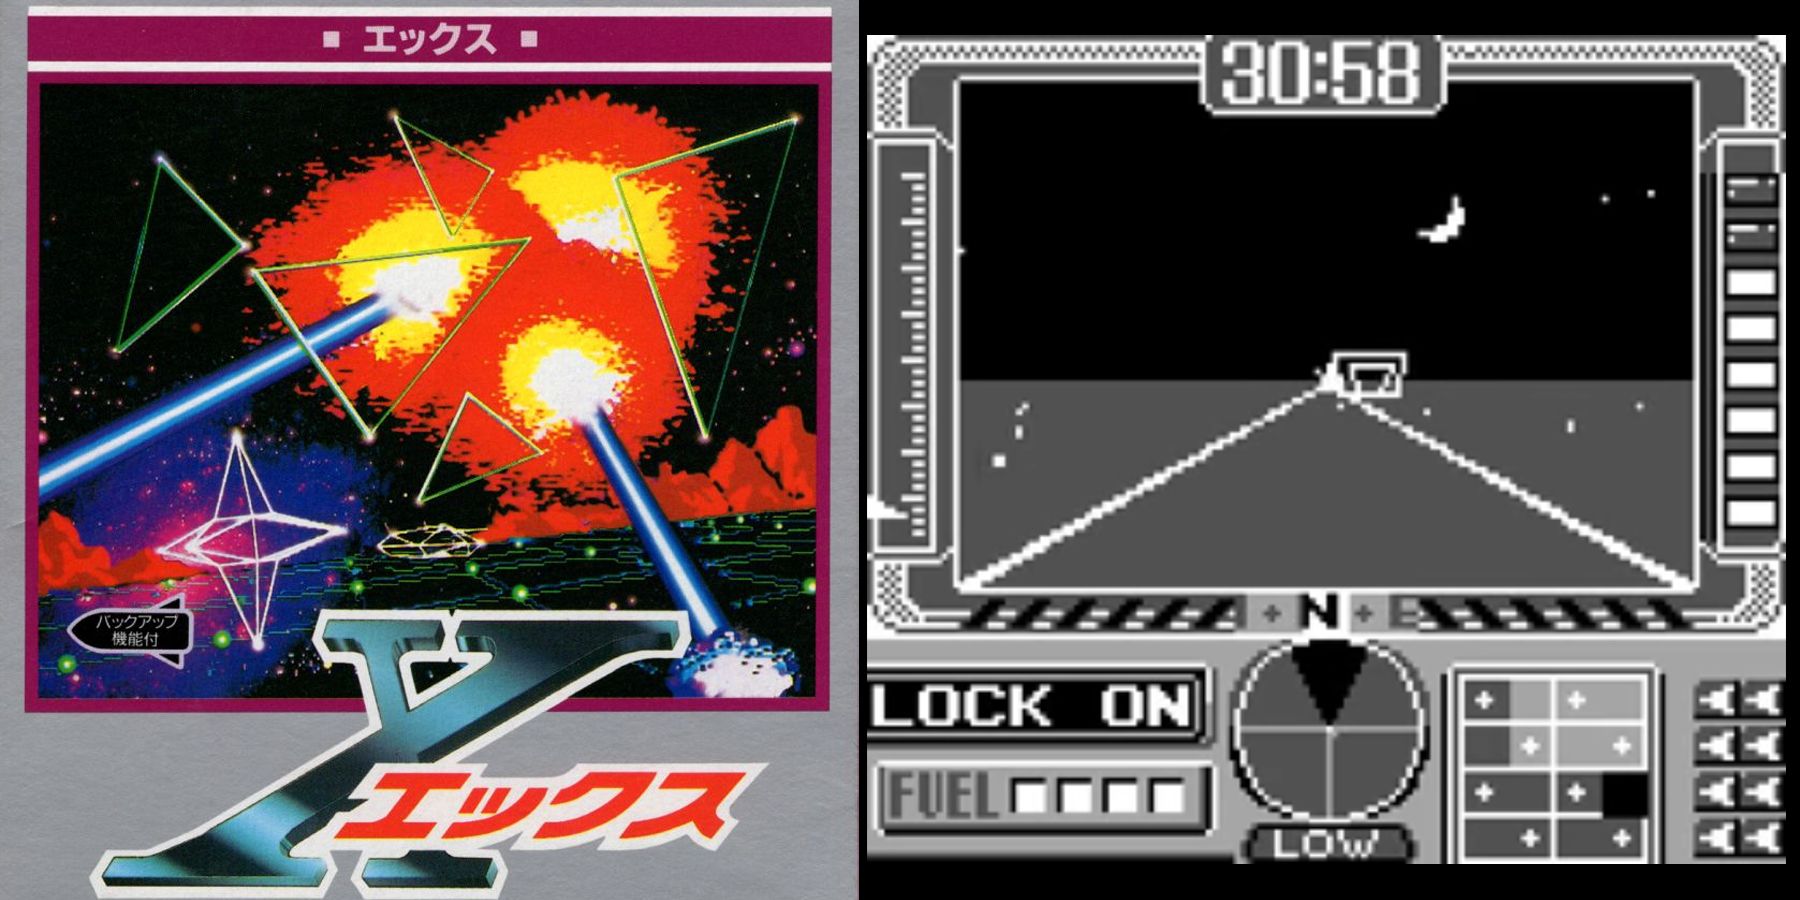 X Game Boy cover art and screenshot.